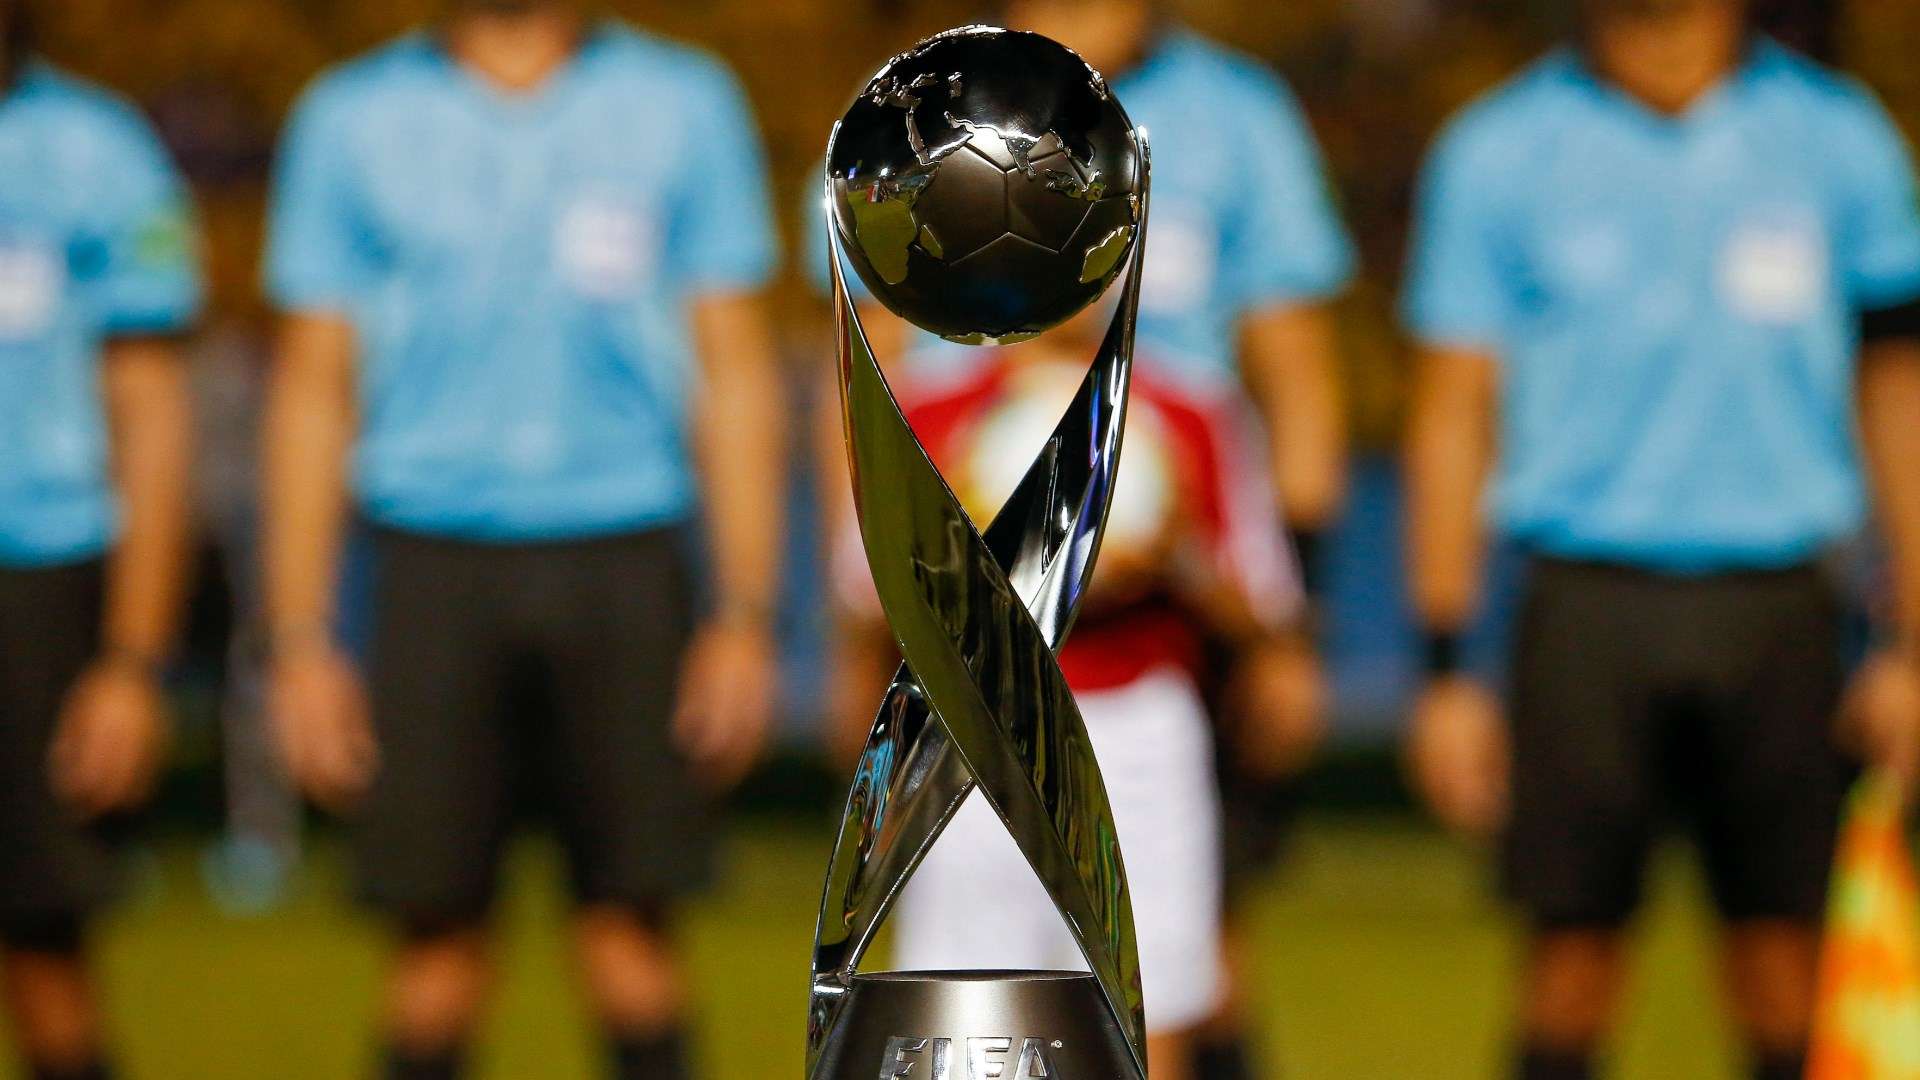 Under-17 World Cup trophy U17 World Cup trophy